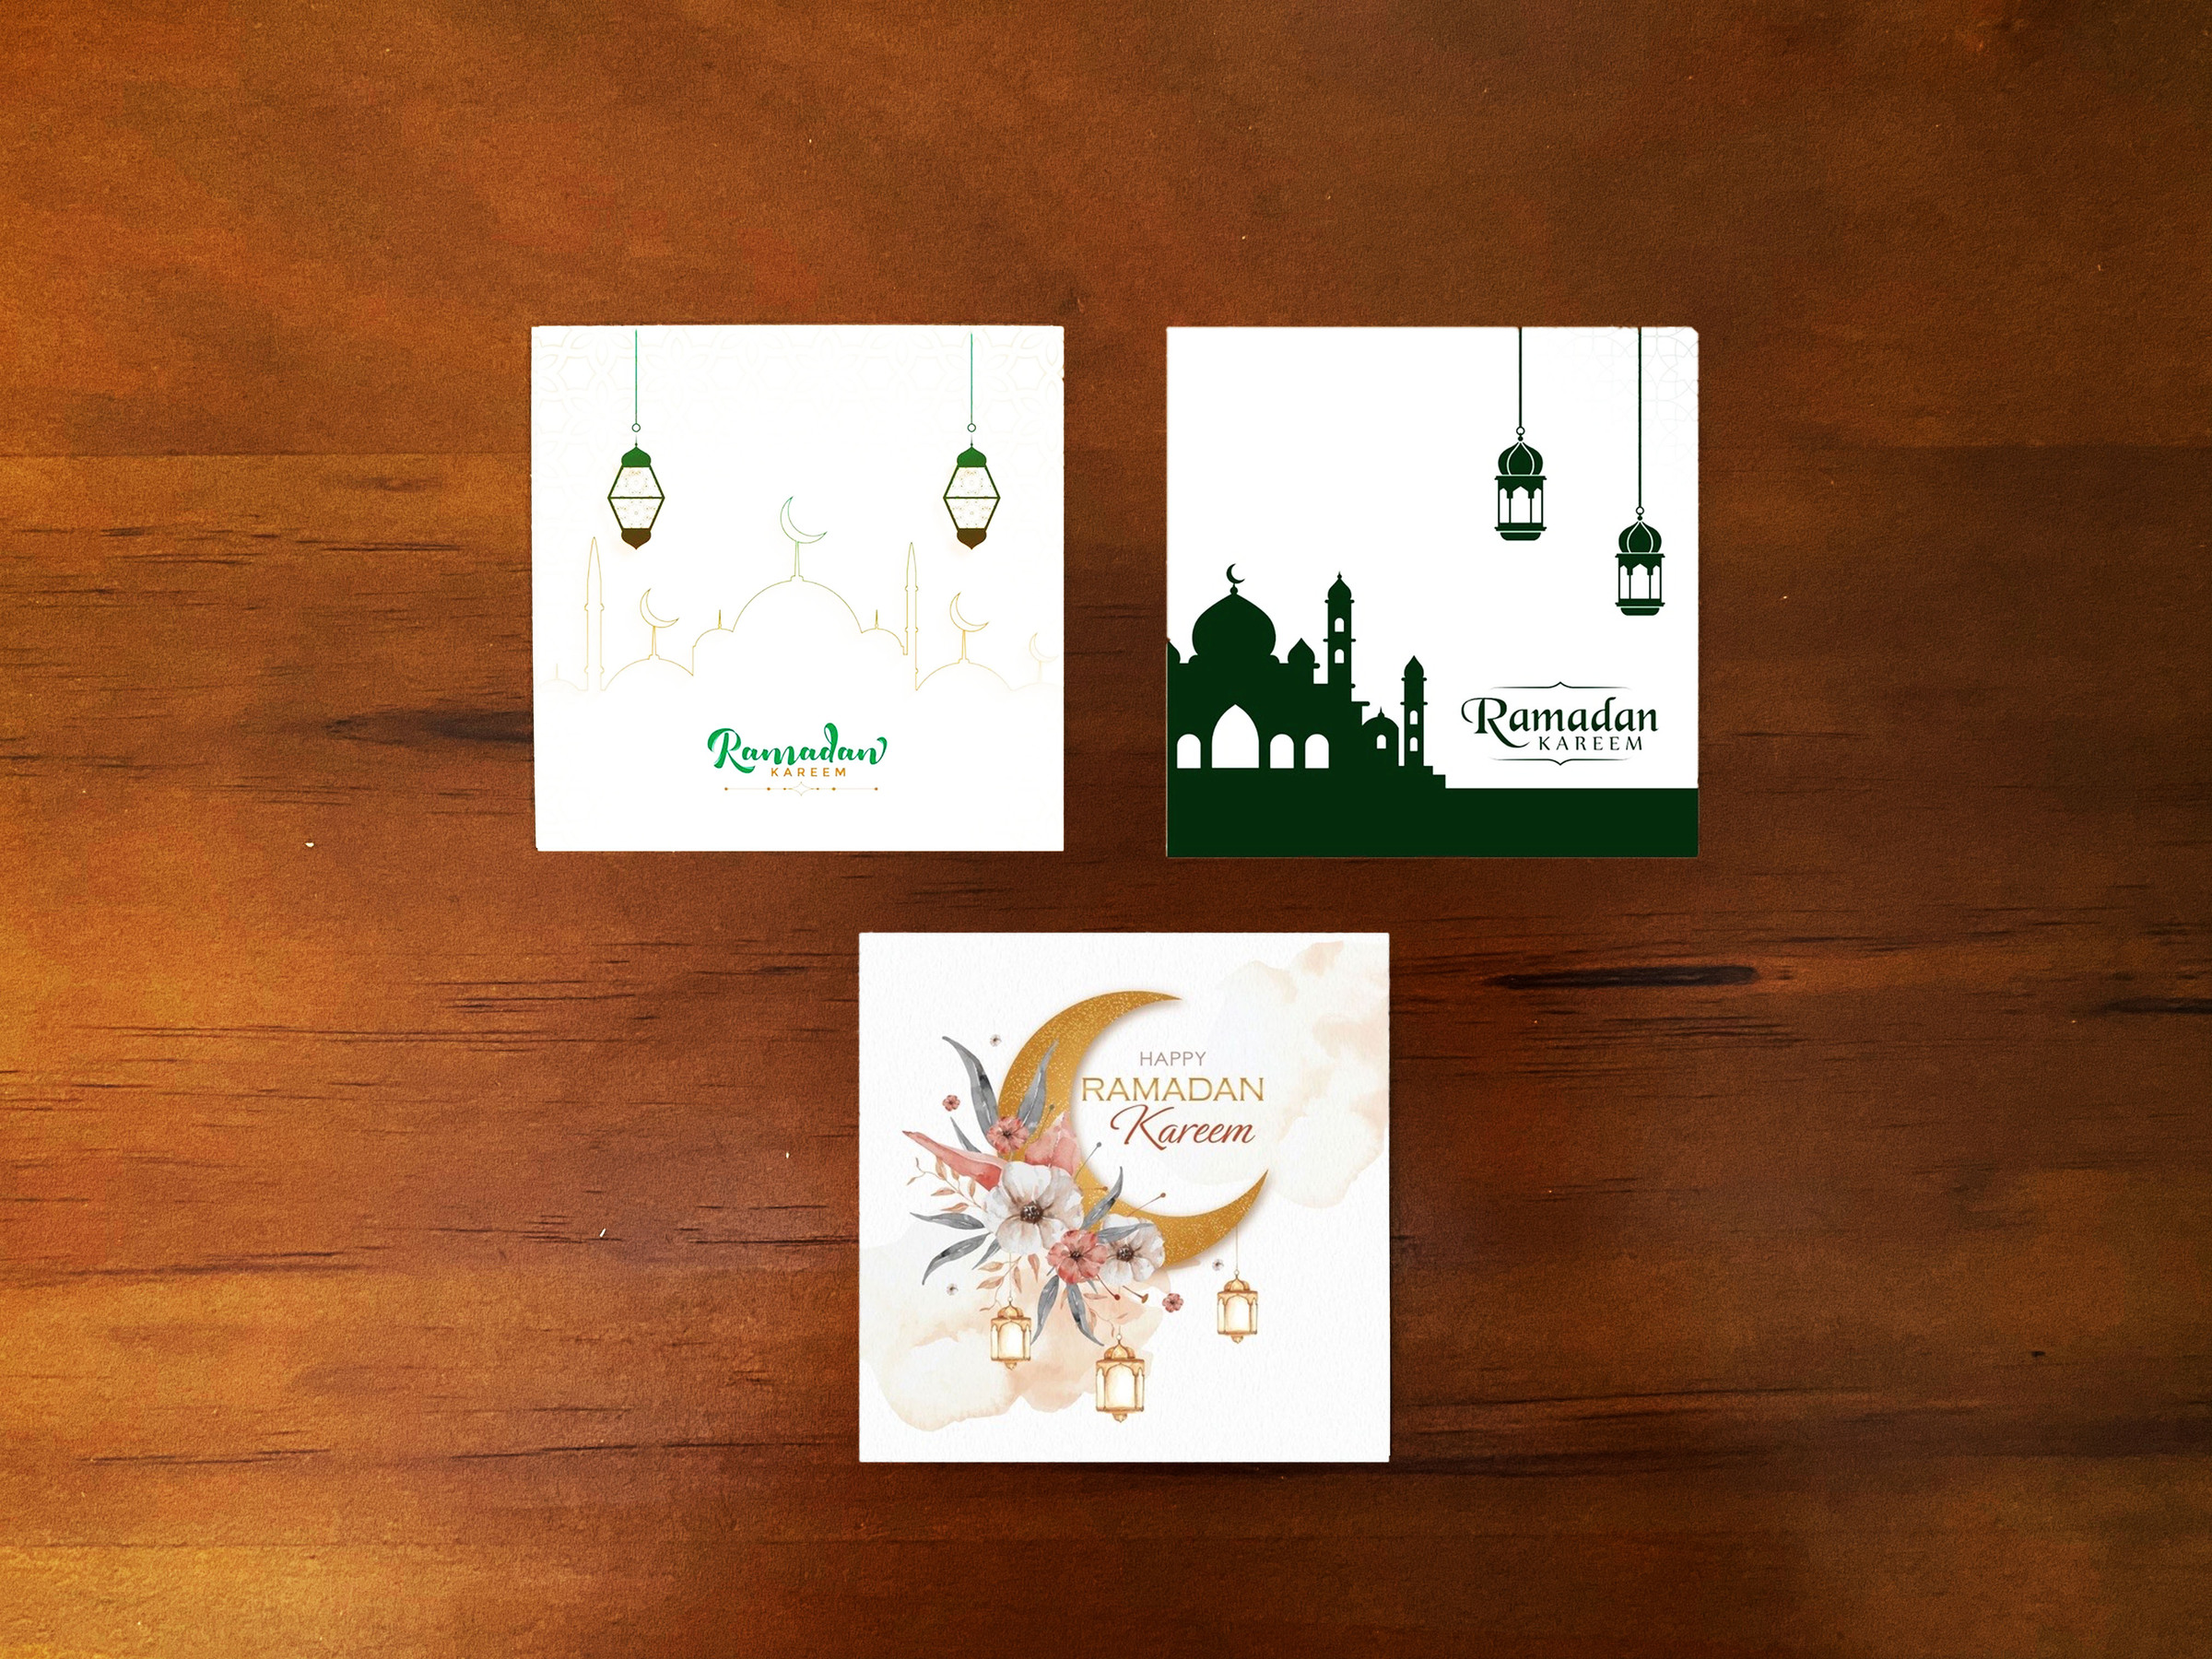 Ramadhan card